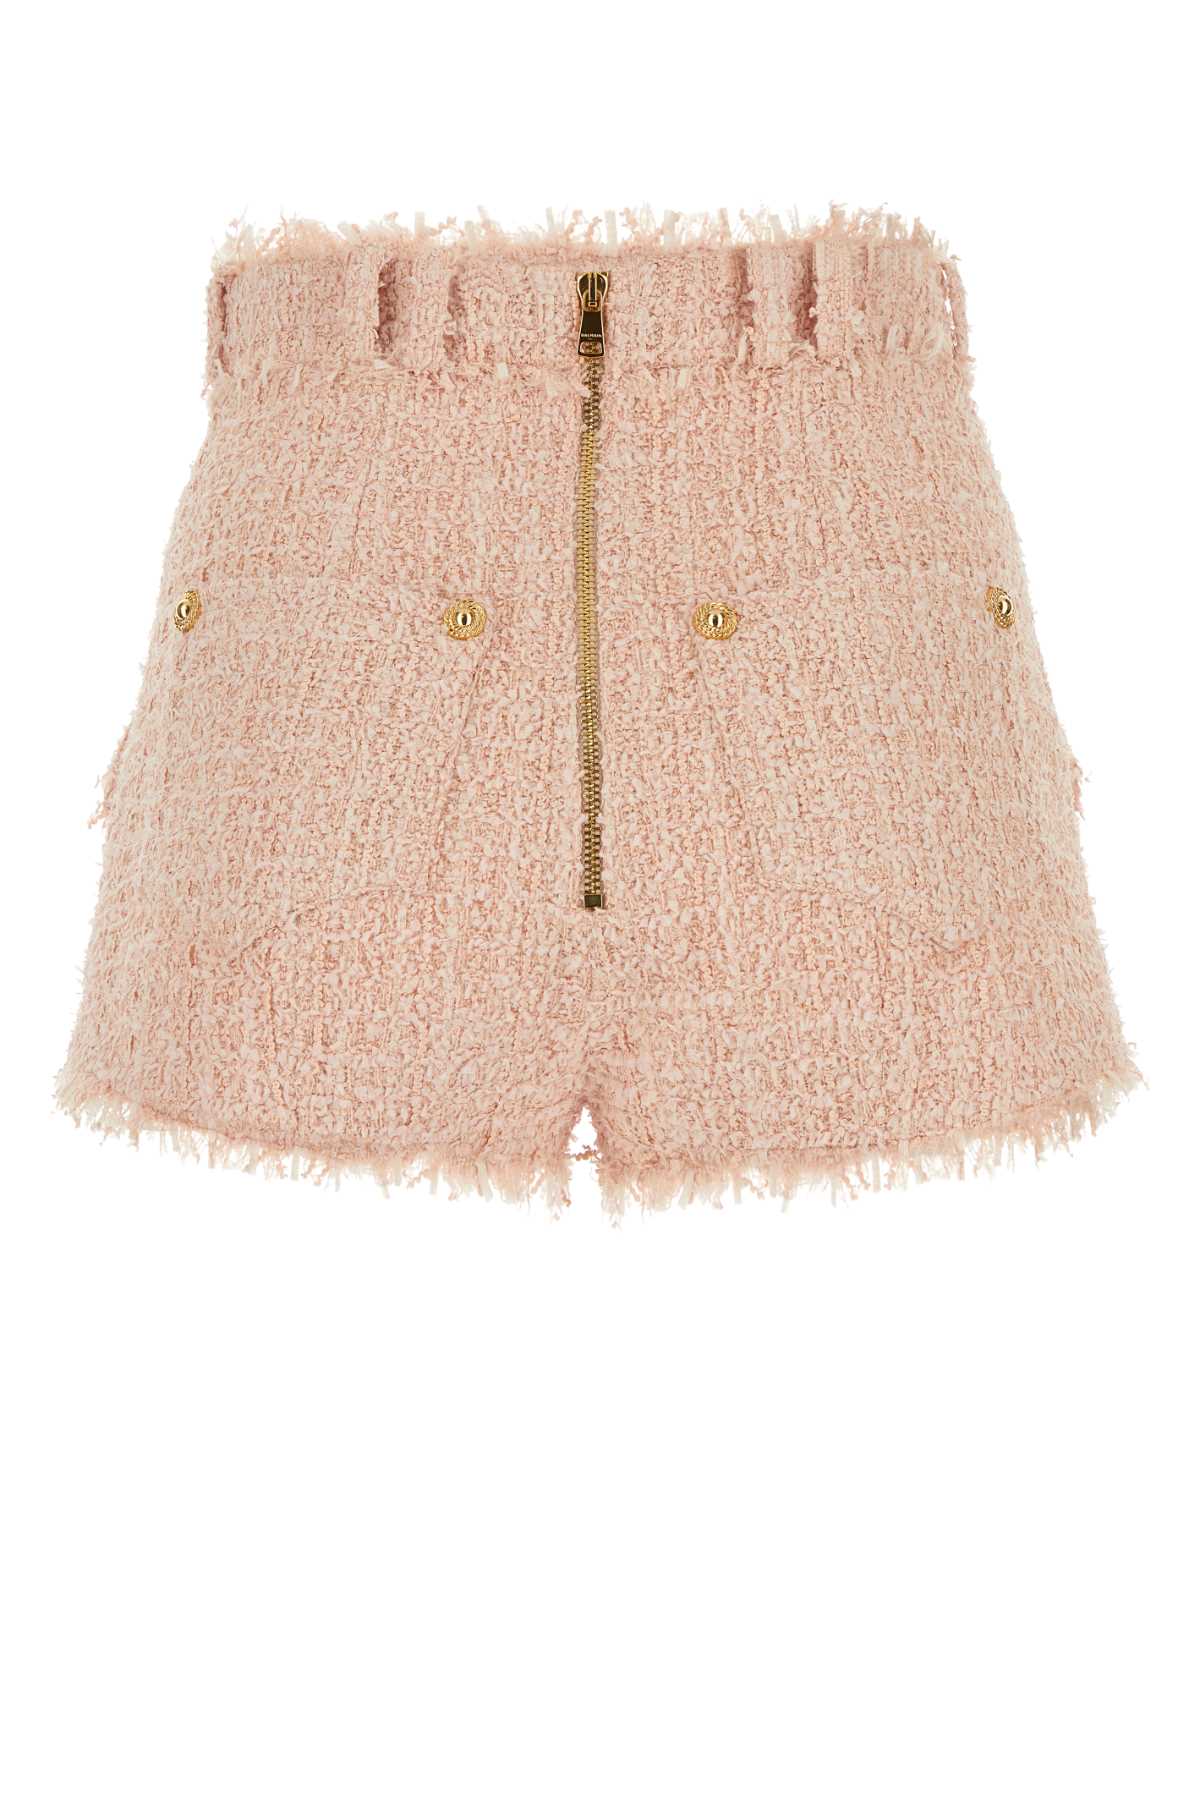 Balmain Light Pink Tweed Shorts In 0dxnuderosé